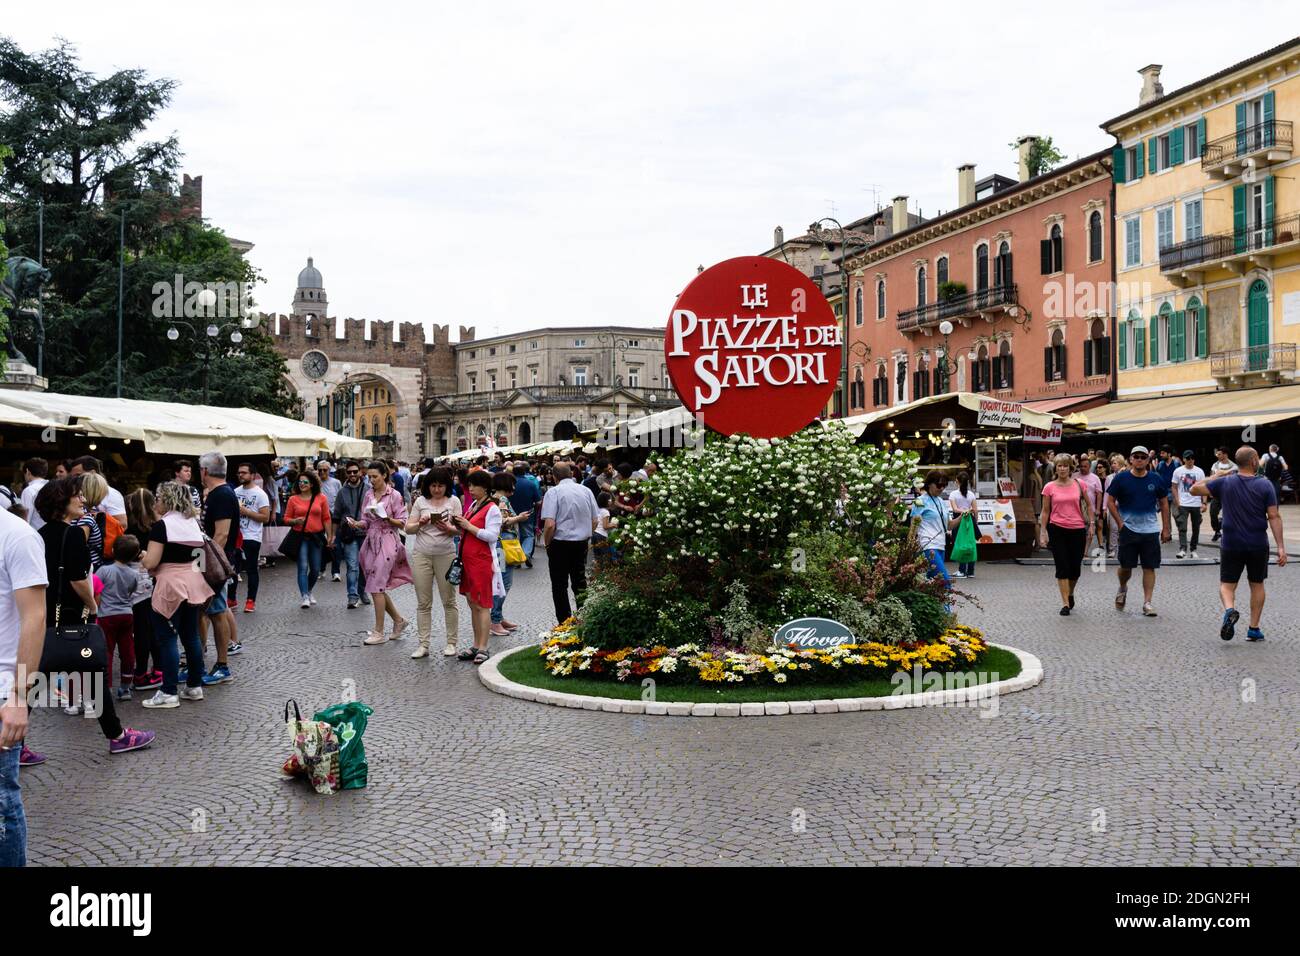 ITALY, ITALY - Dec 02, 2016: Le piazze de sapori market in italy, shot of the main square Stock Photo